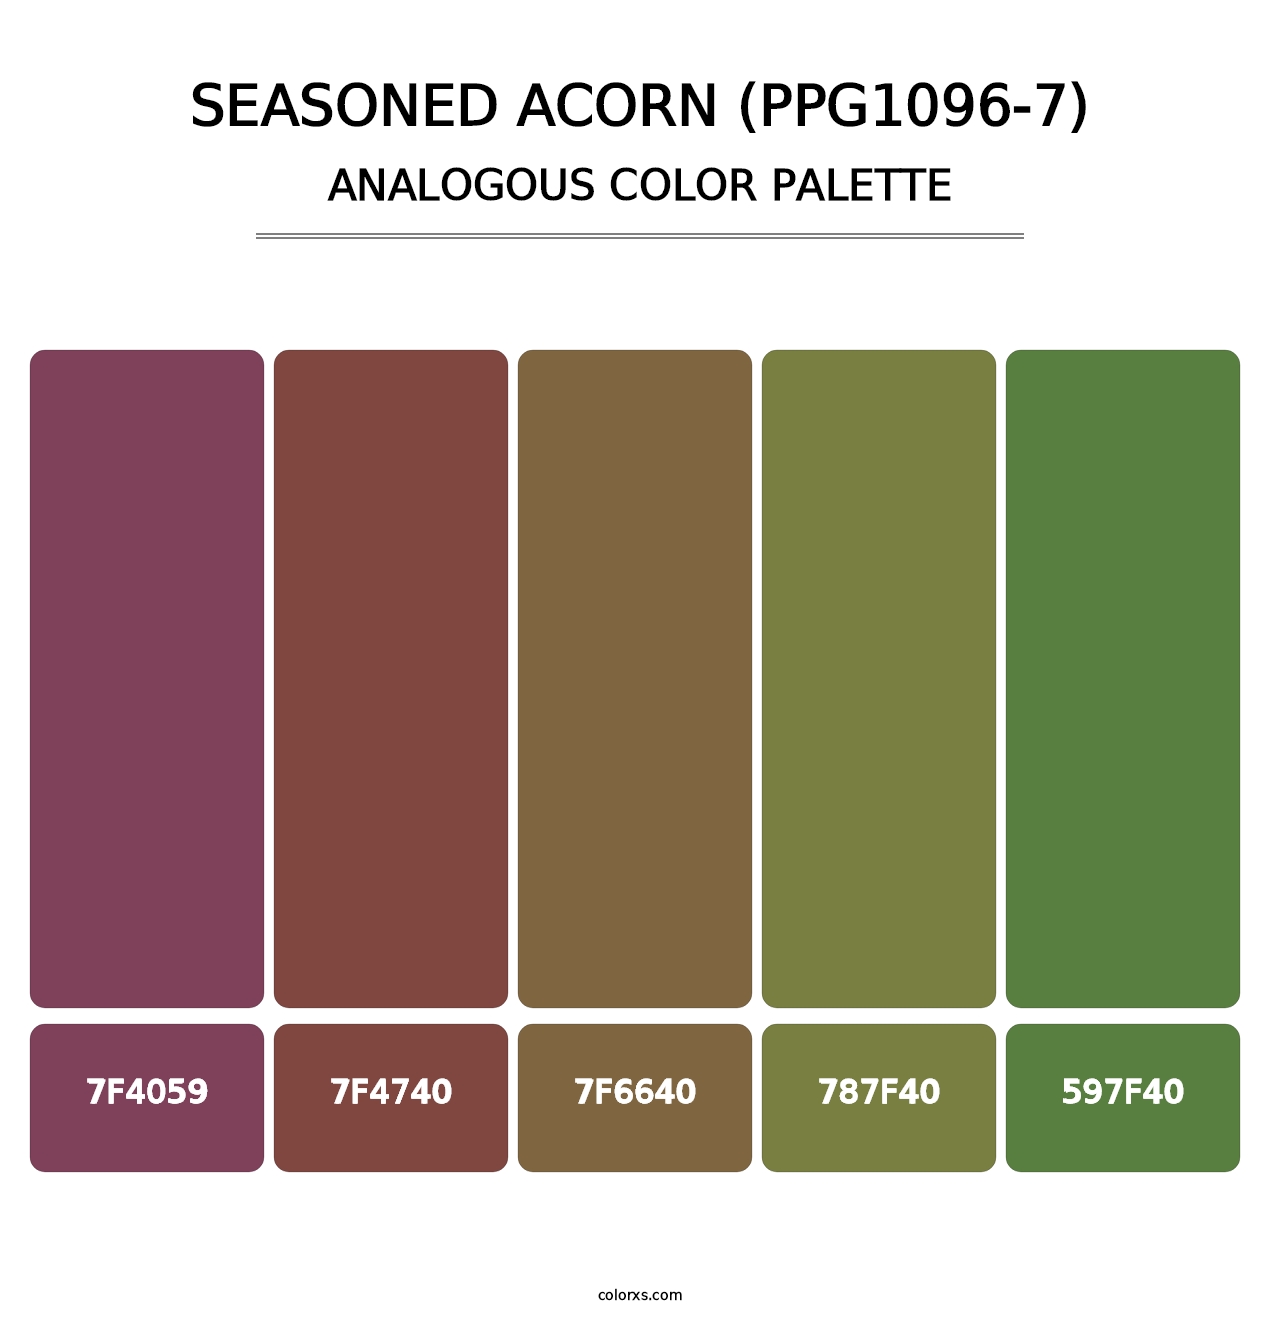 Seasoned Acorn (PPG1096-7) - Analogous Color Palette